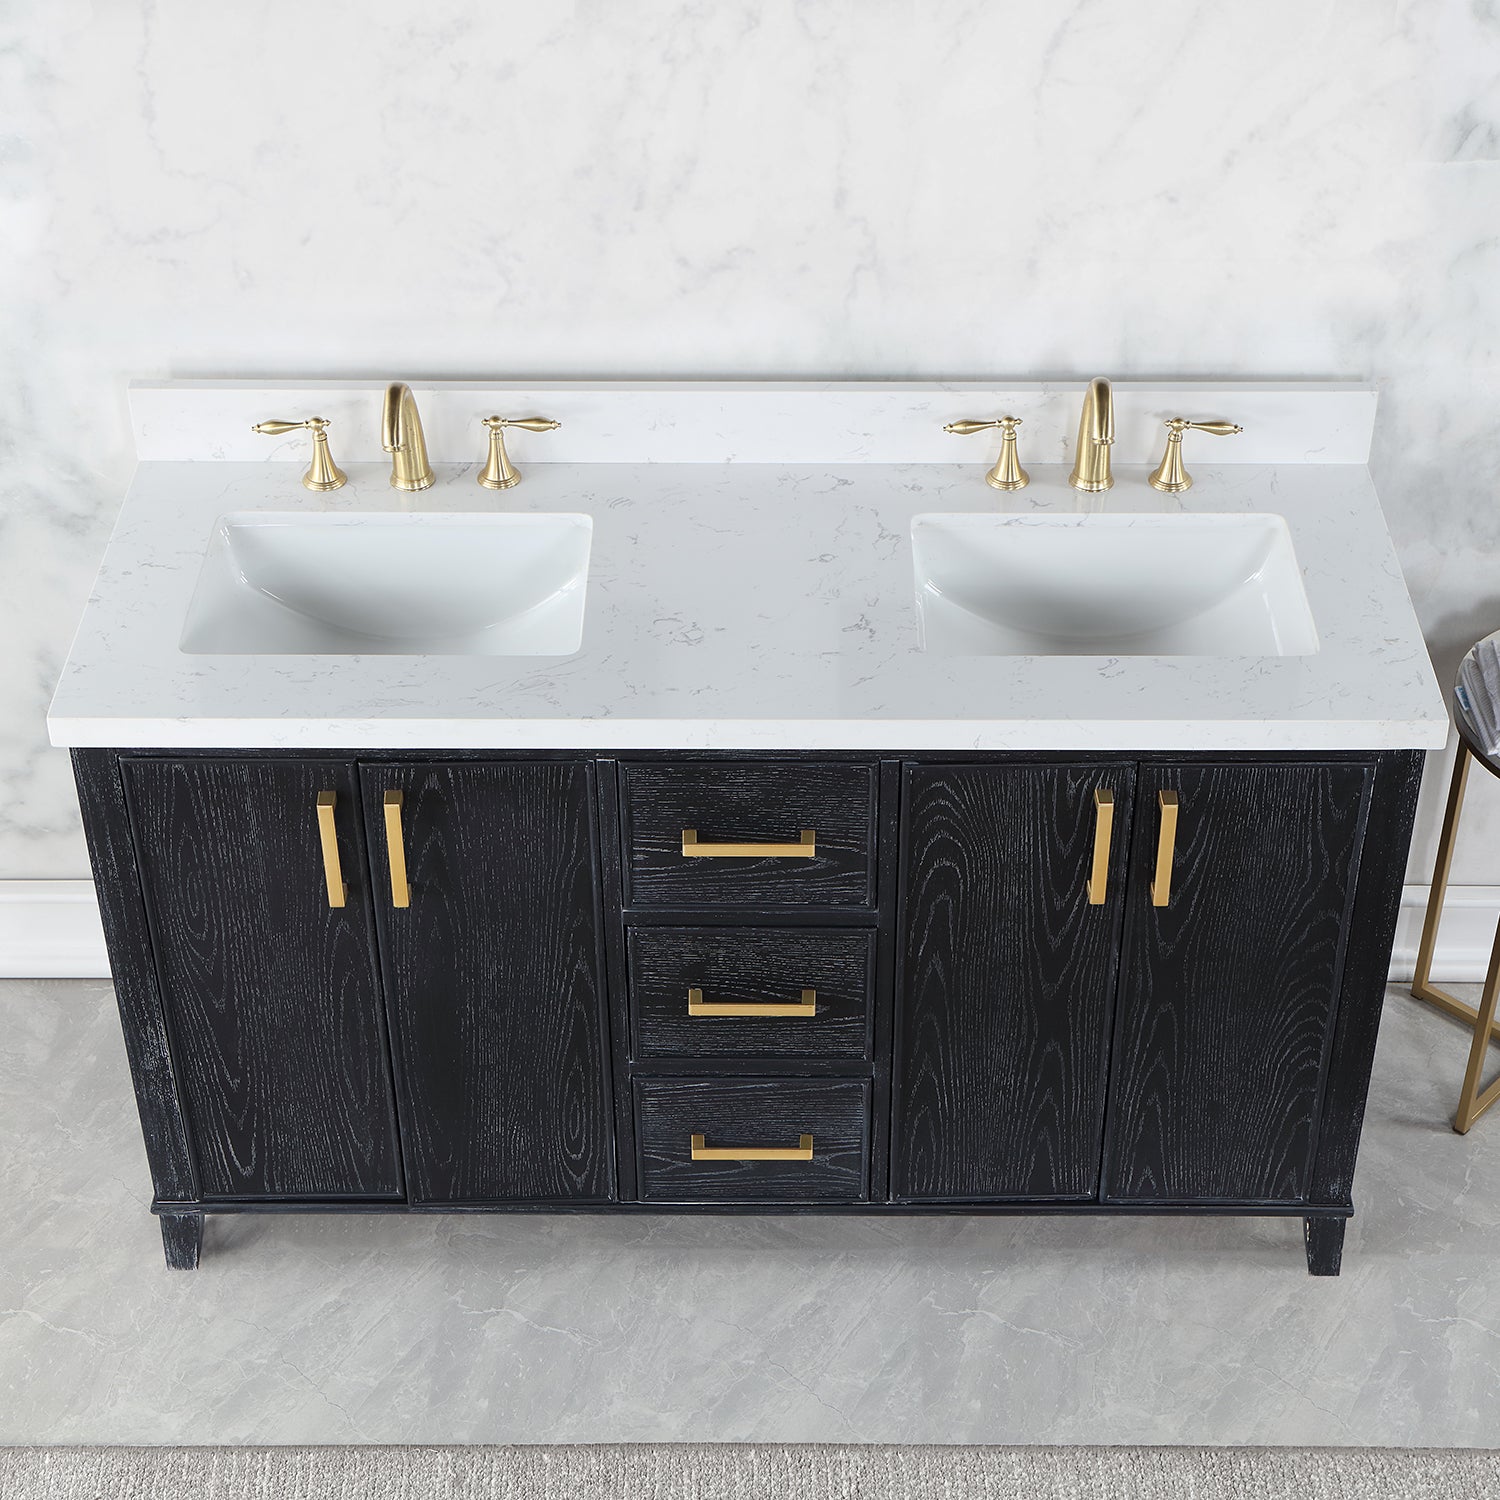 Weiser 60" Double Bathroom Vanity Set with Composite Aosta White Stone Countertop